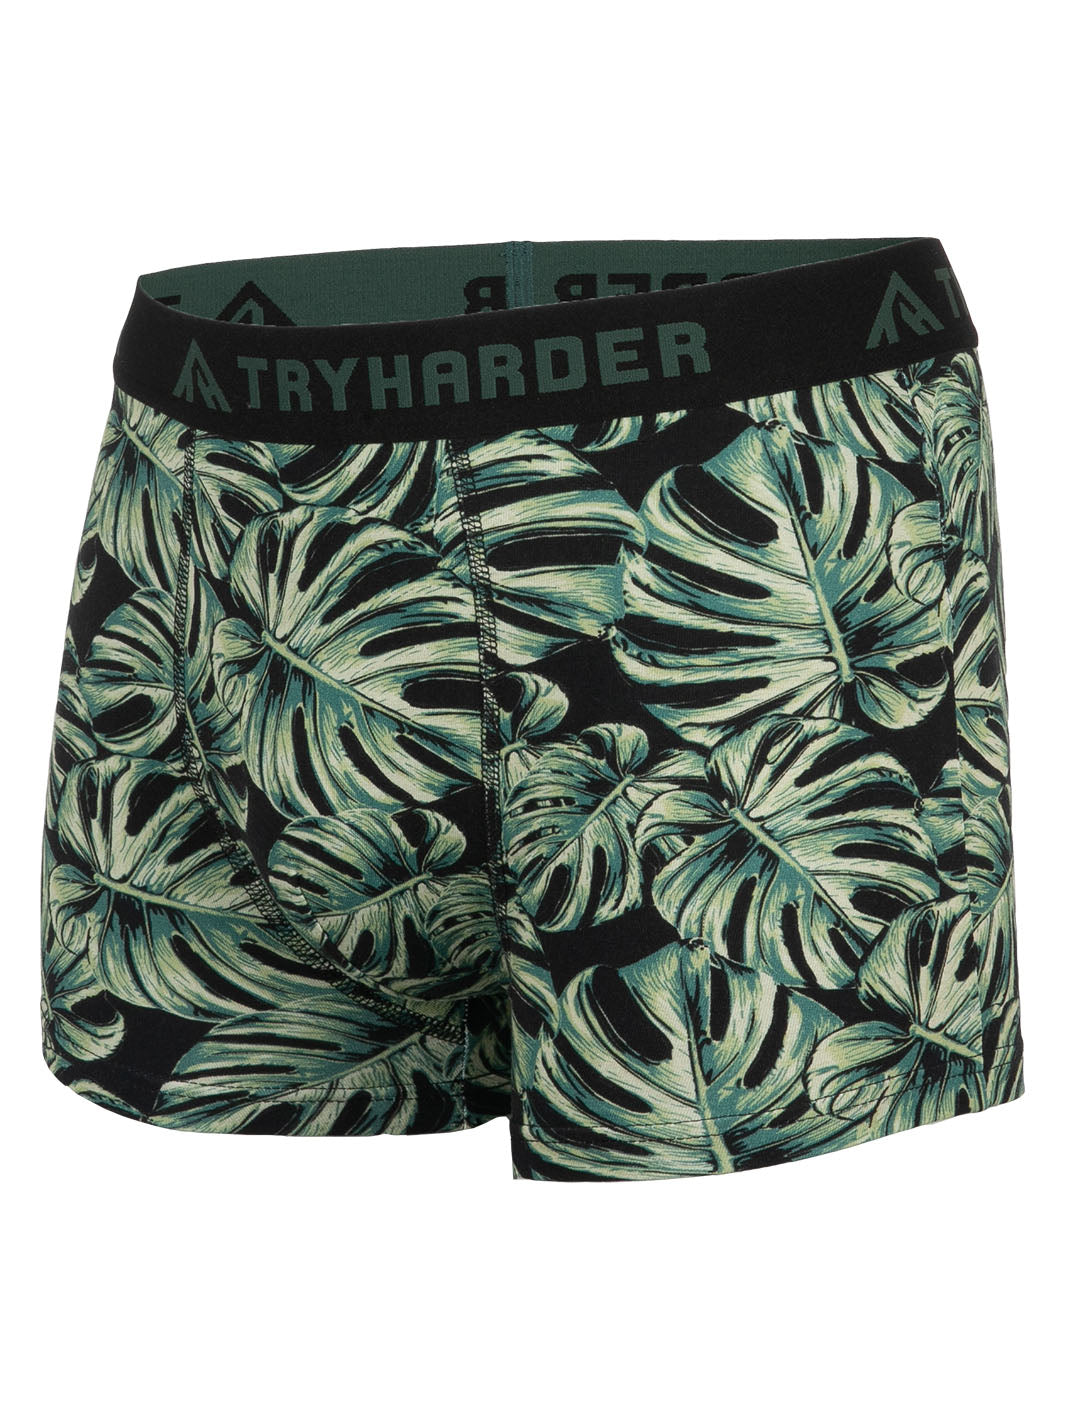 TRYHARDER - Boxer - Grüne Blätter 1 Packung